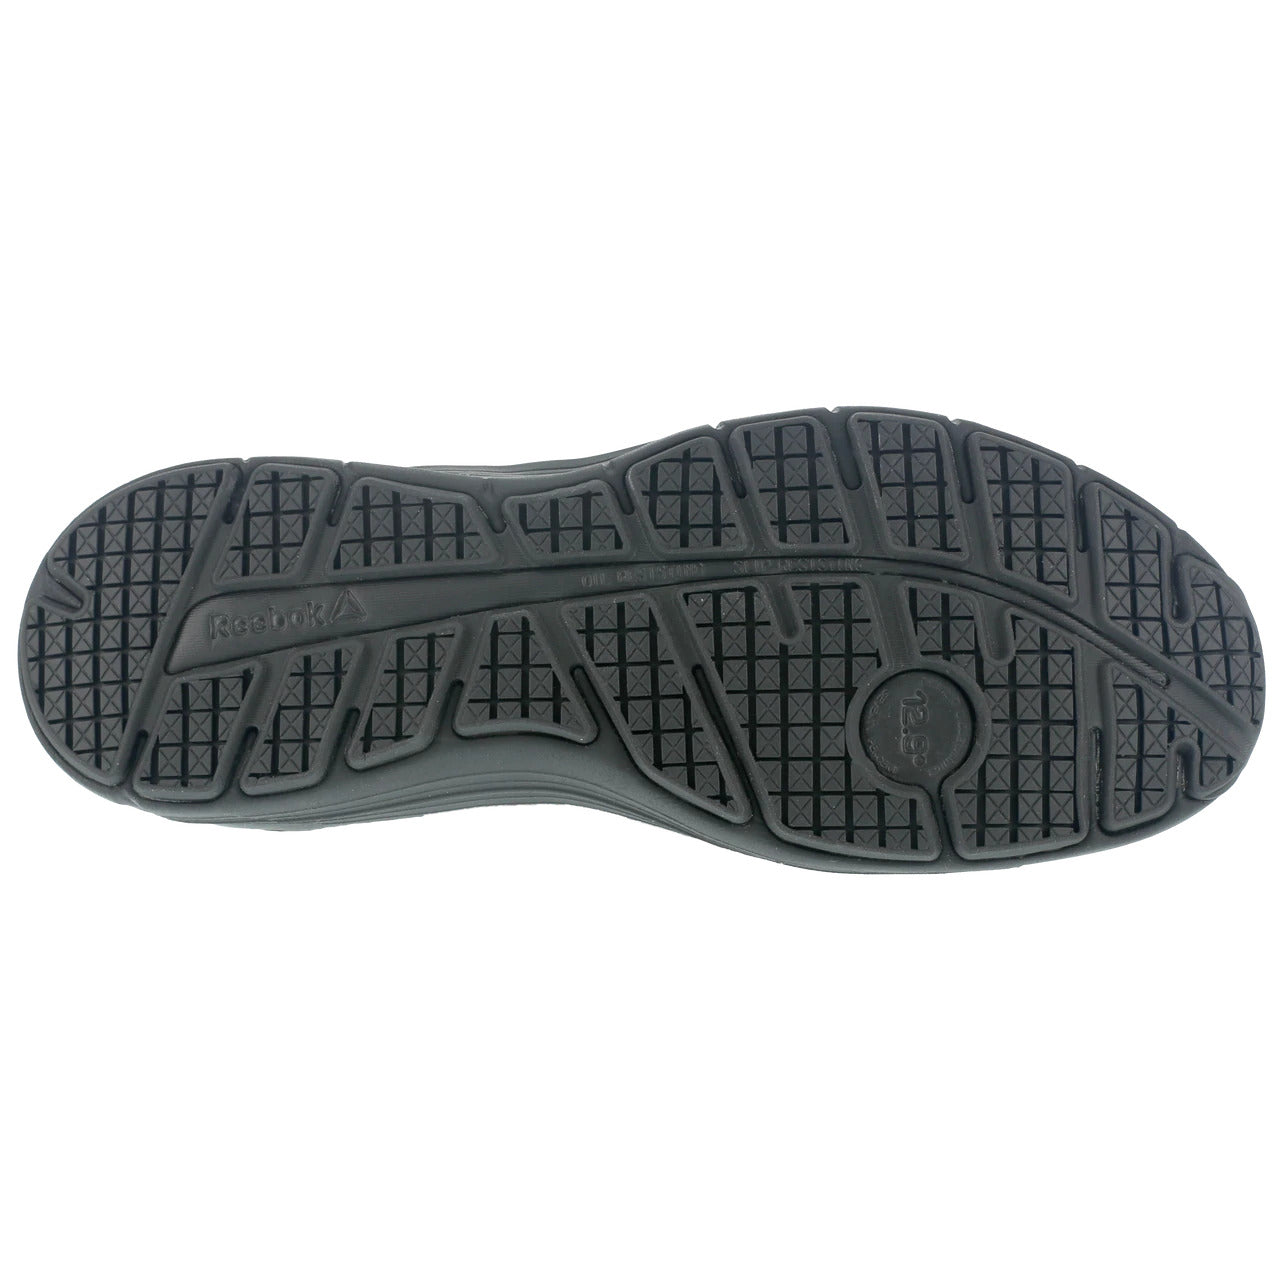 RB3501 GUIDE WORK - Men's Performance Cross Trainer Steel Toe Sneaker (Black)